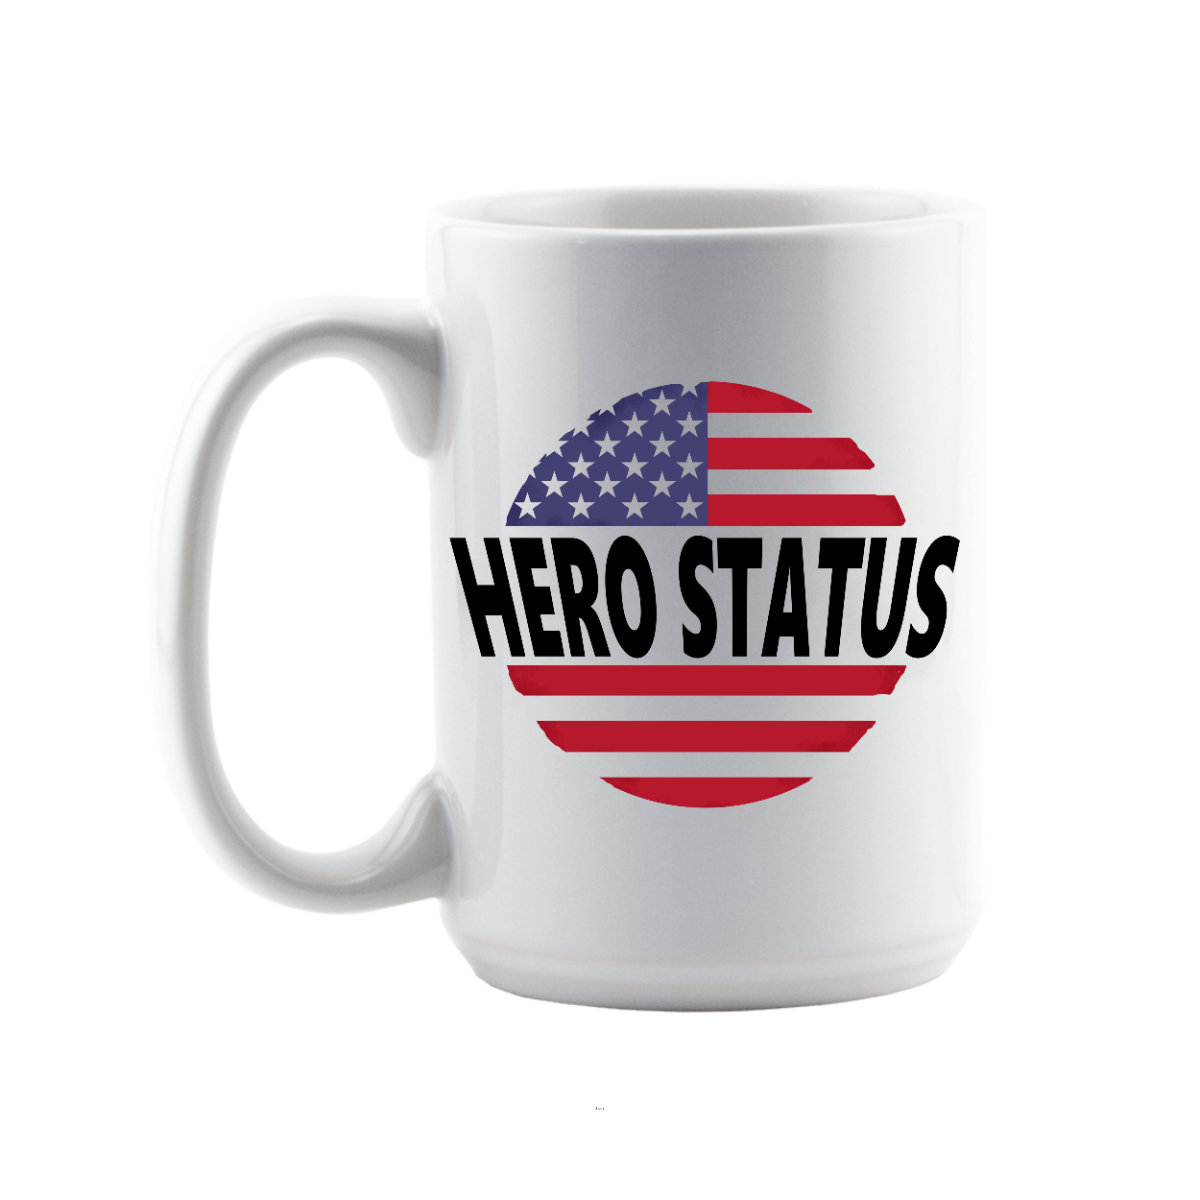 15 oz Hero Status Coffee Cup